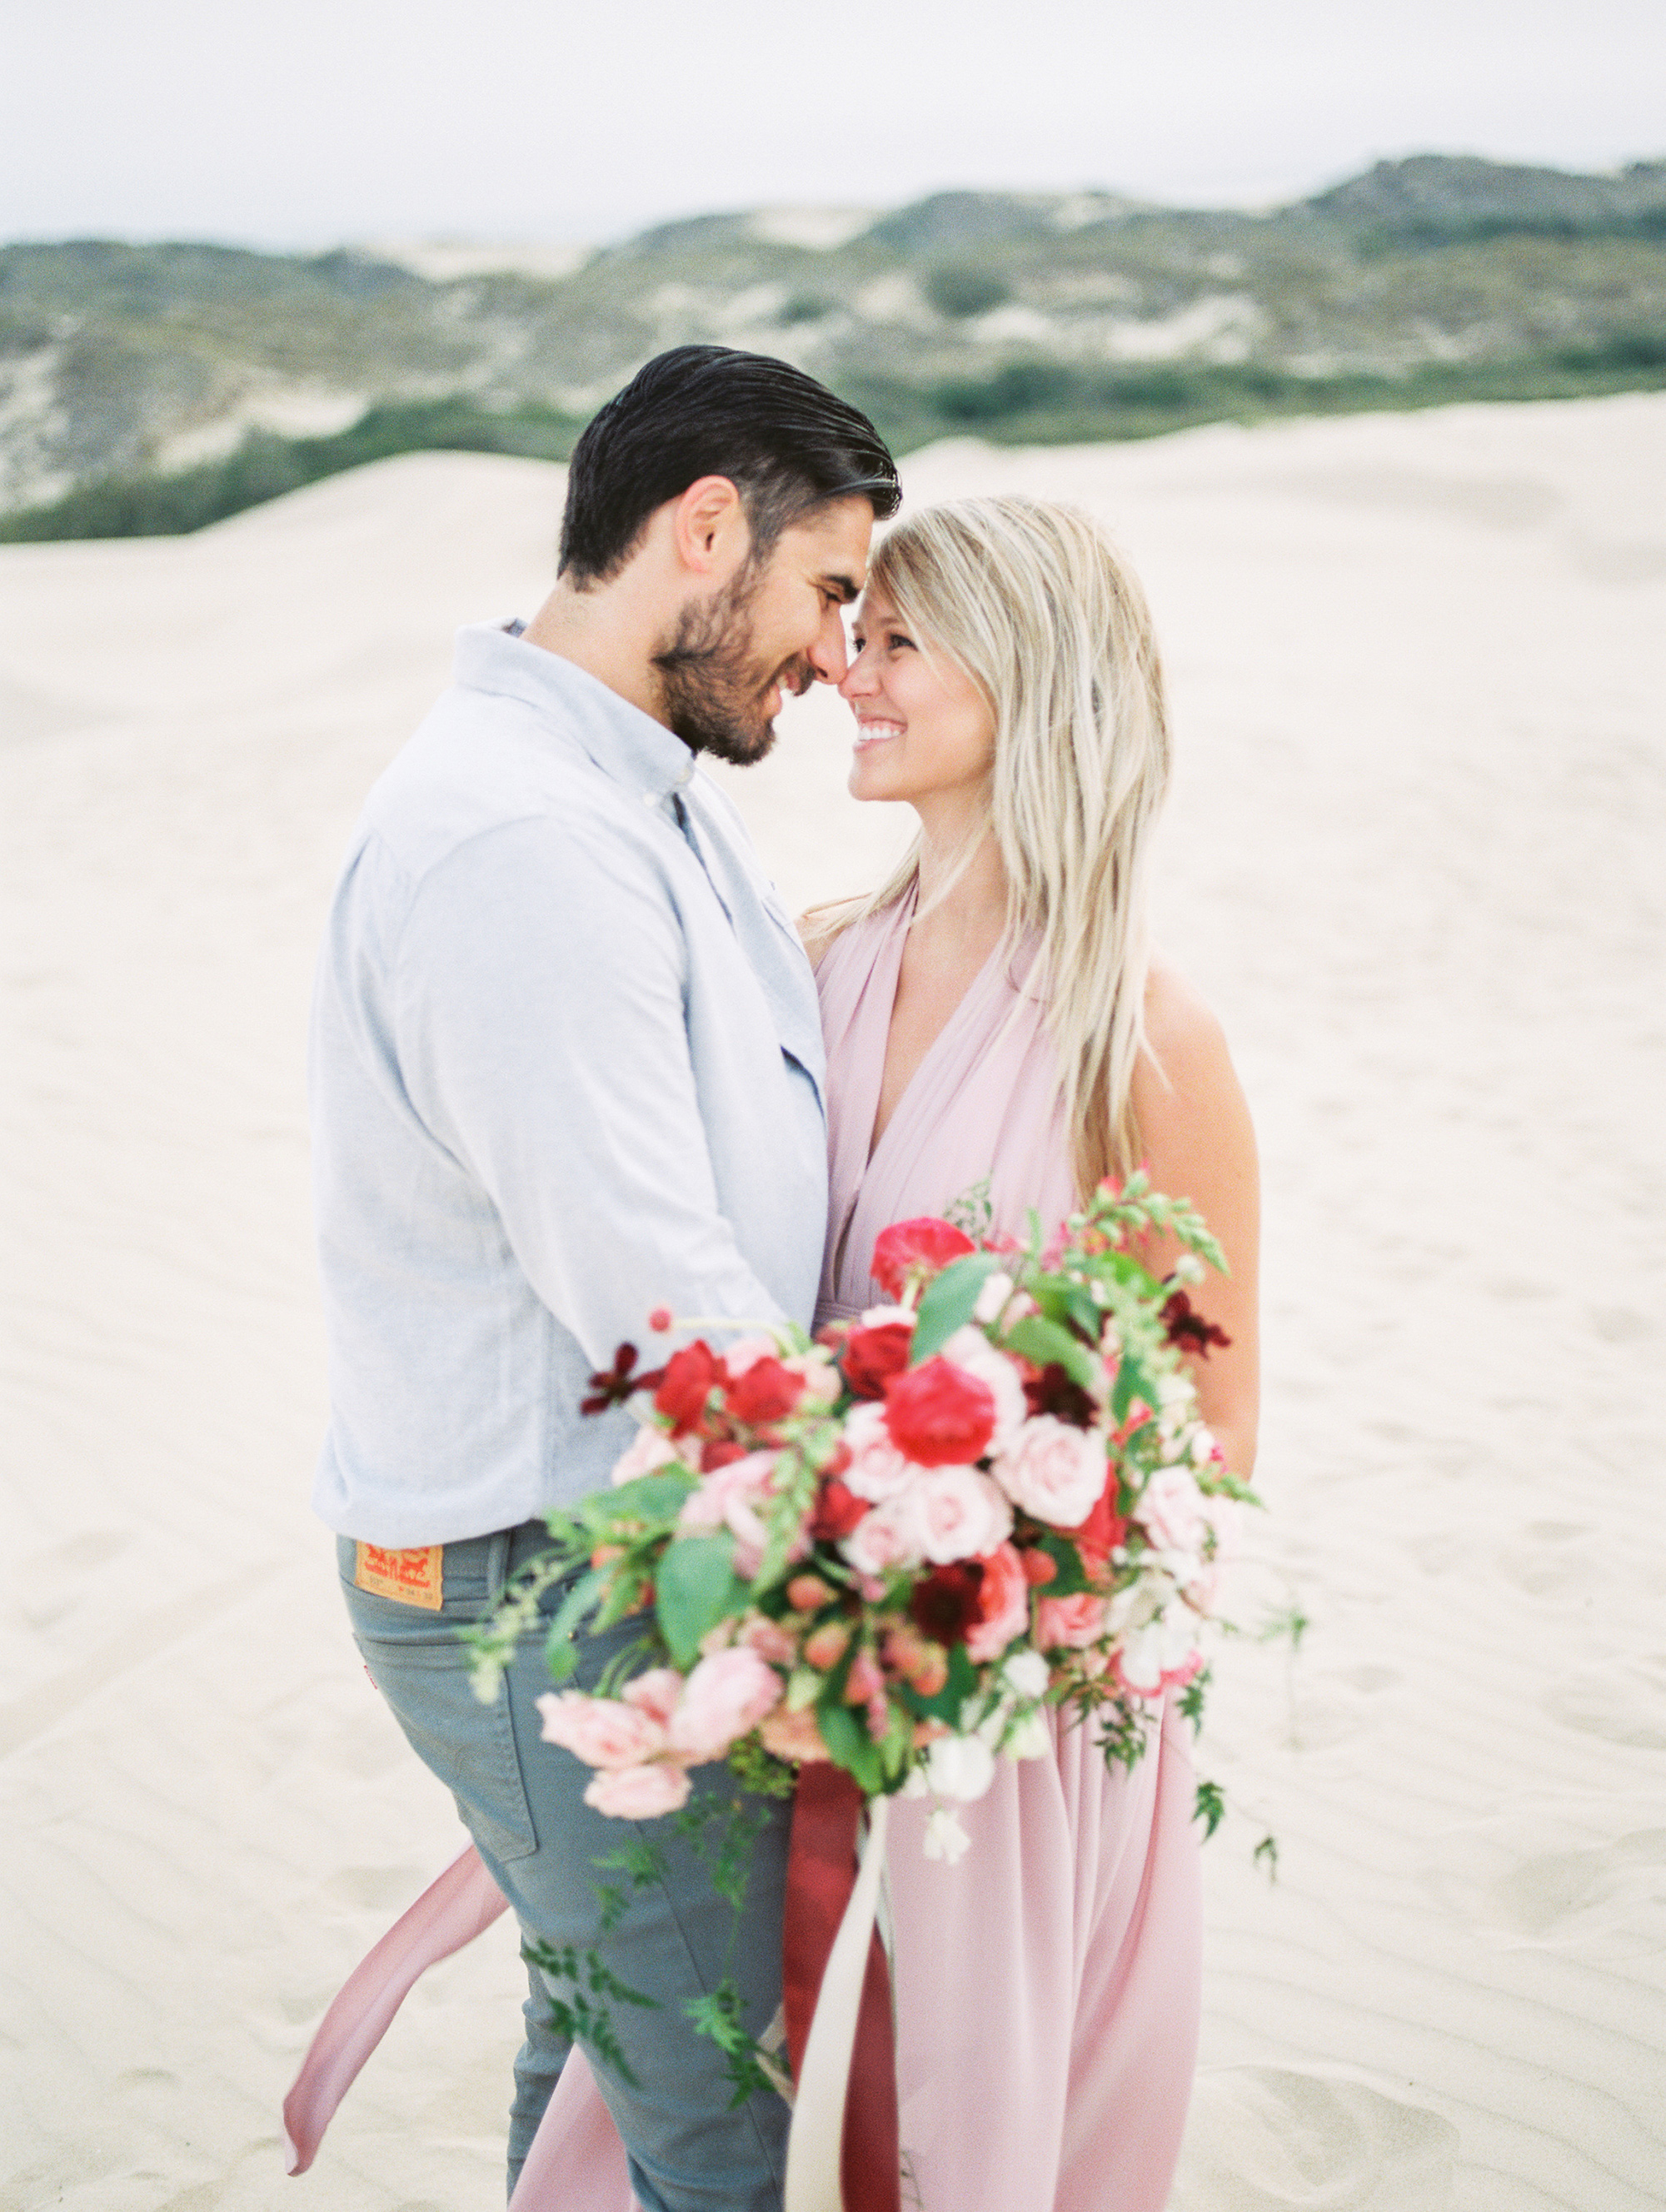 Santa Barbara wedding photographer Tenth & Grace captures Chelsea and Nico on the sand dunes.